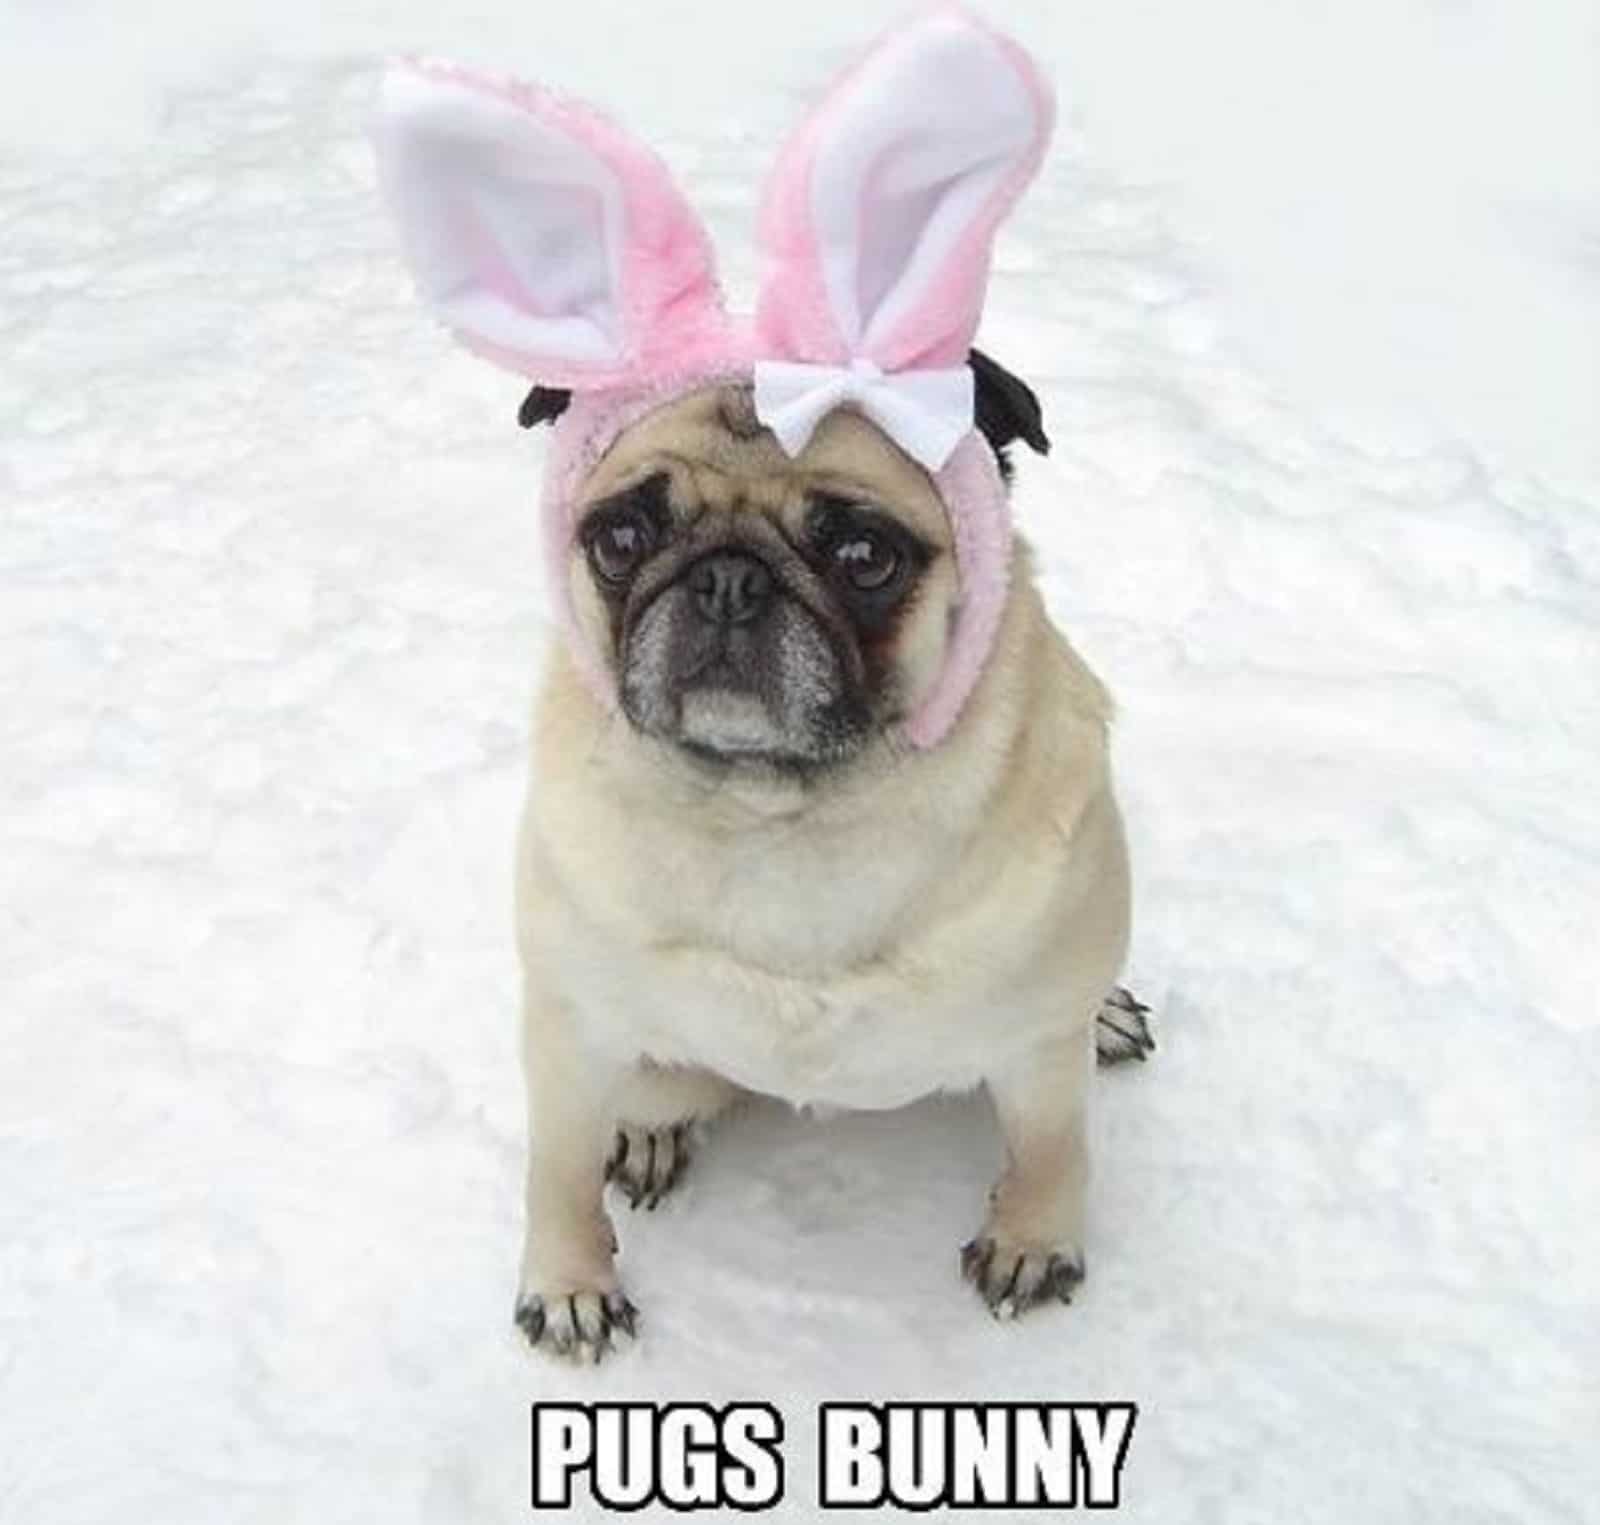 pug wearing bunny ears sitting on the snow